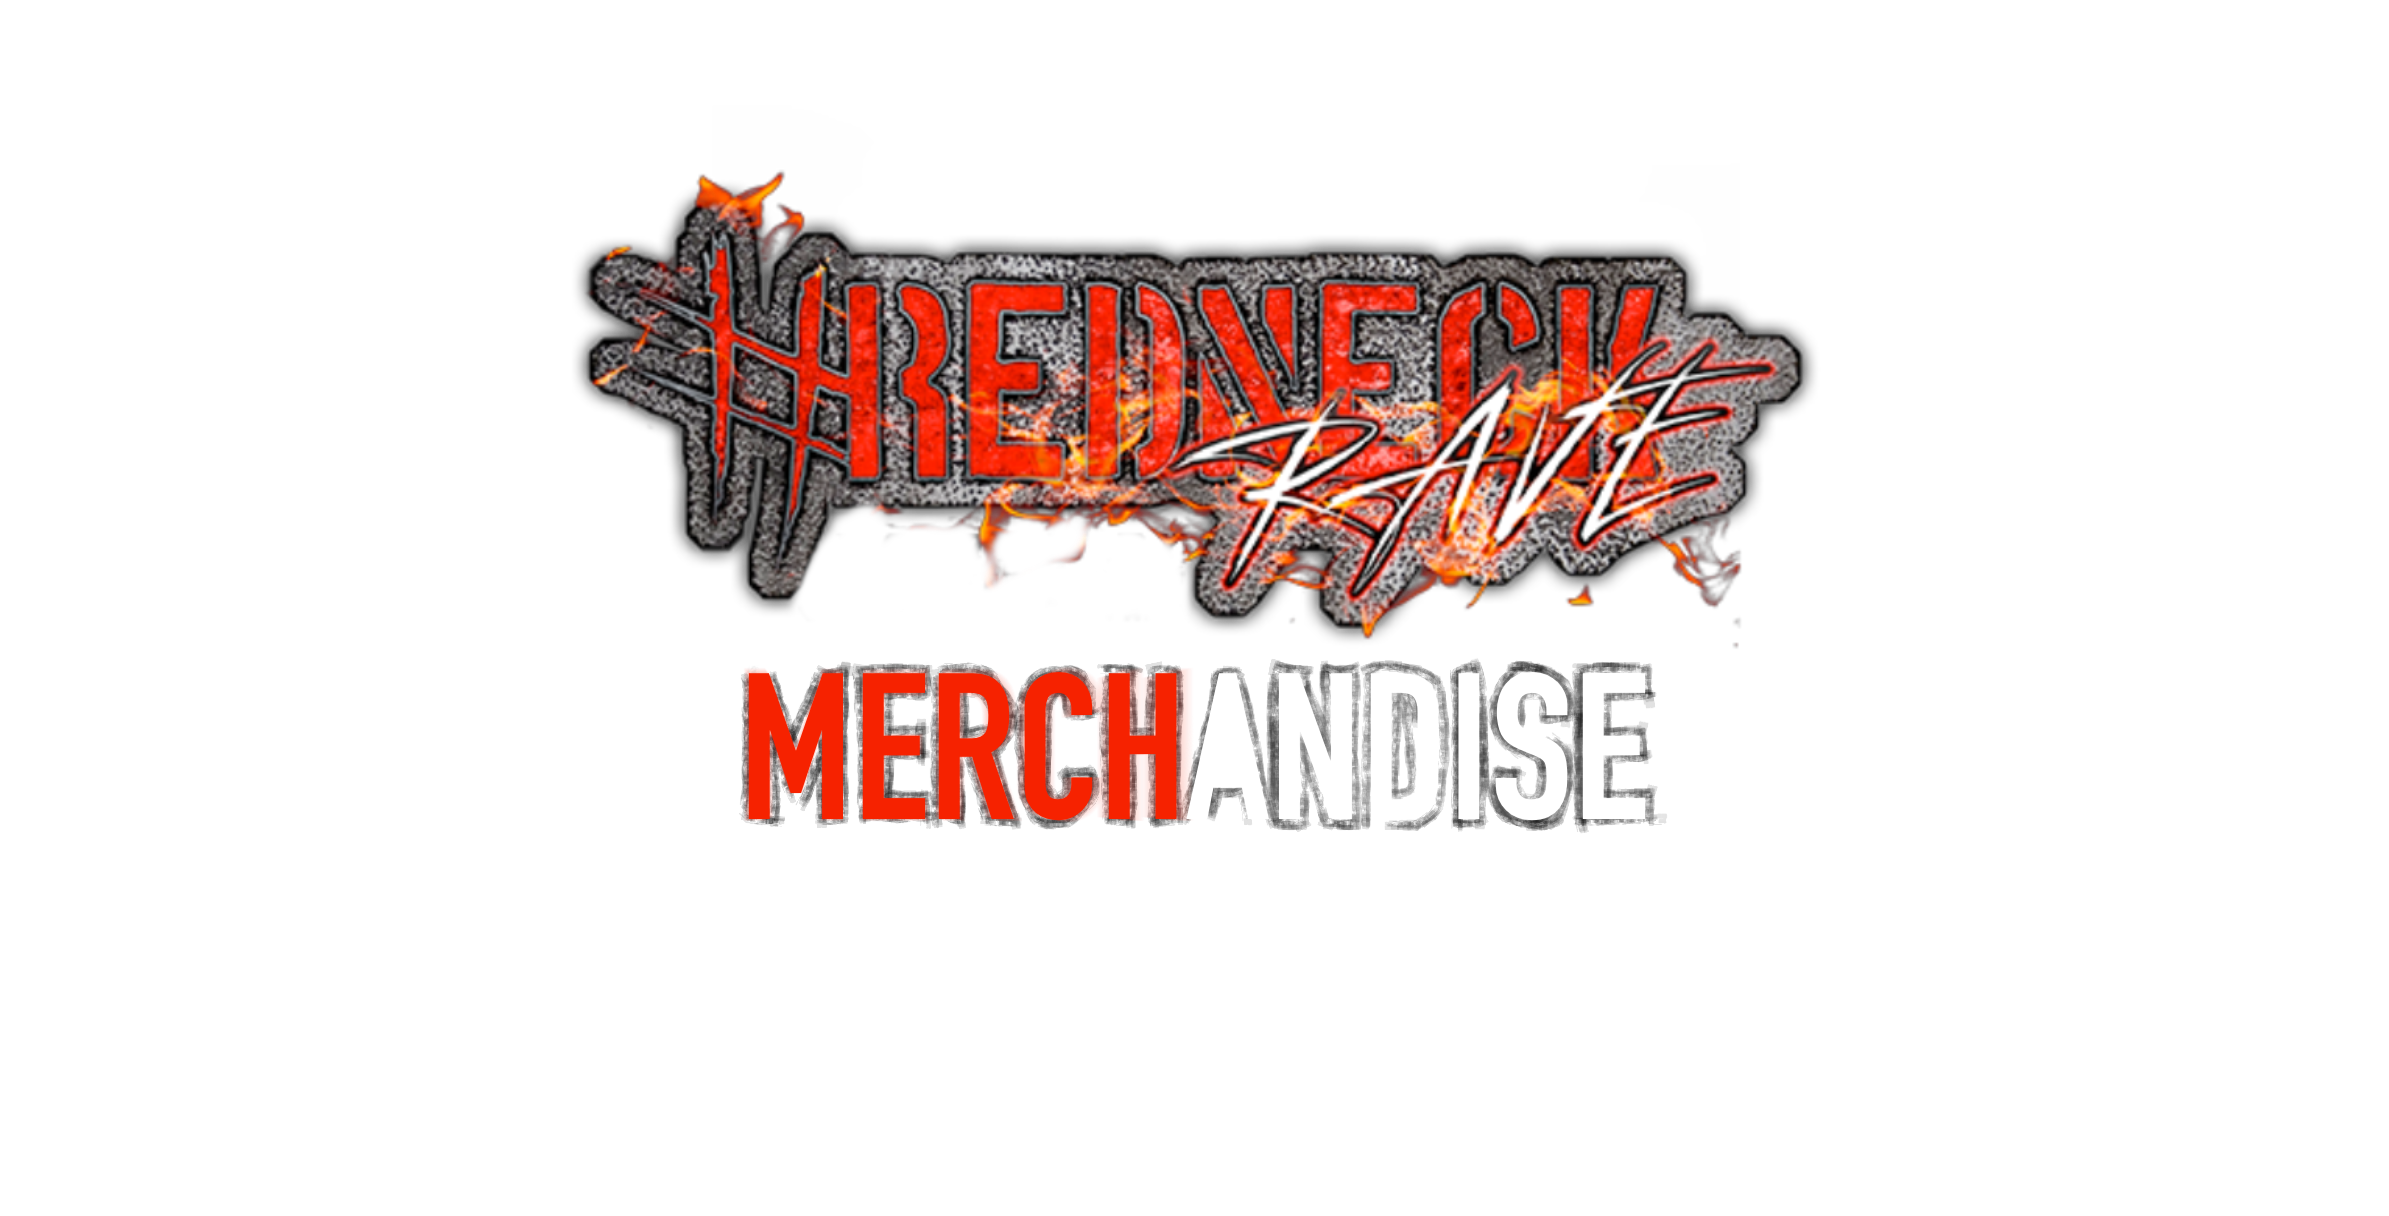 Merchandise – Redneck Rave